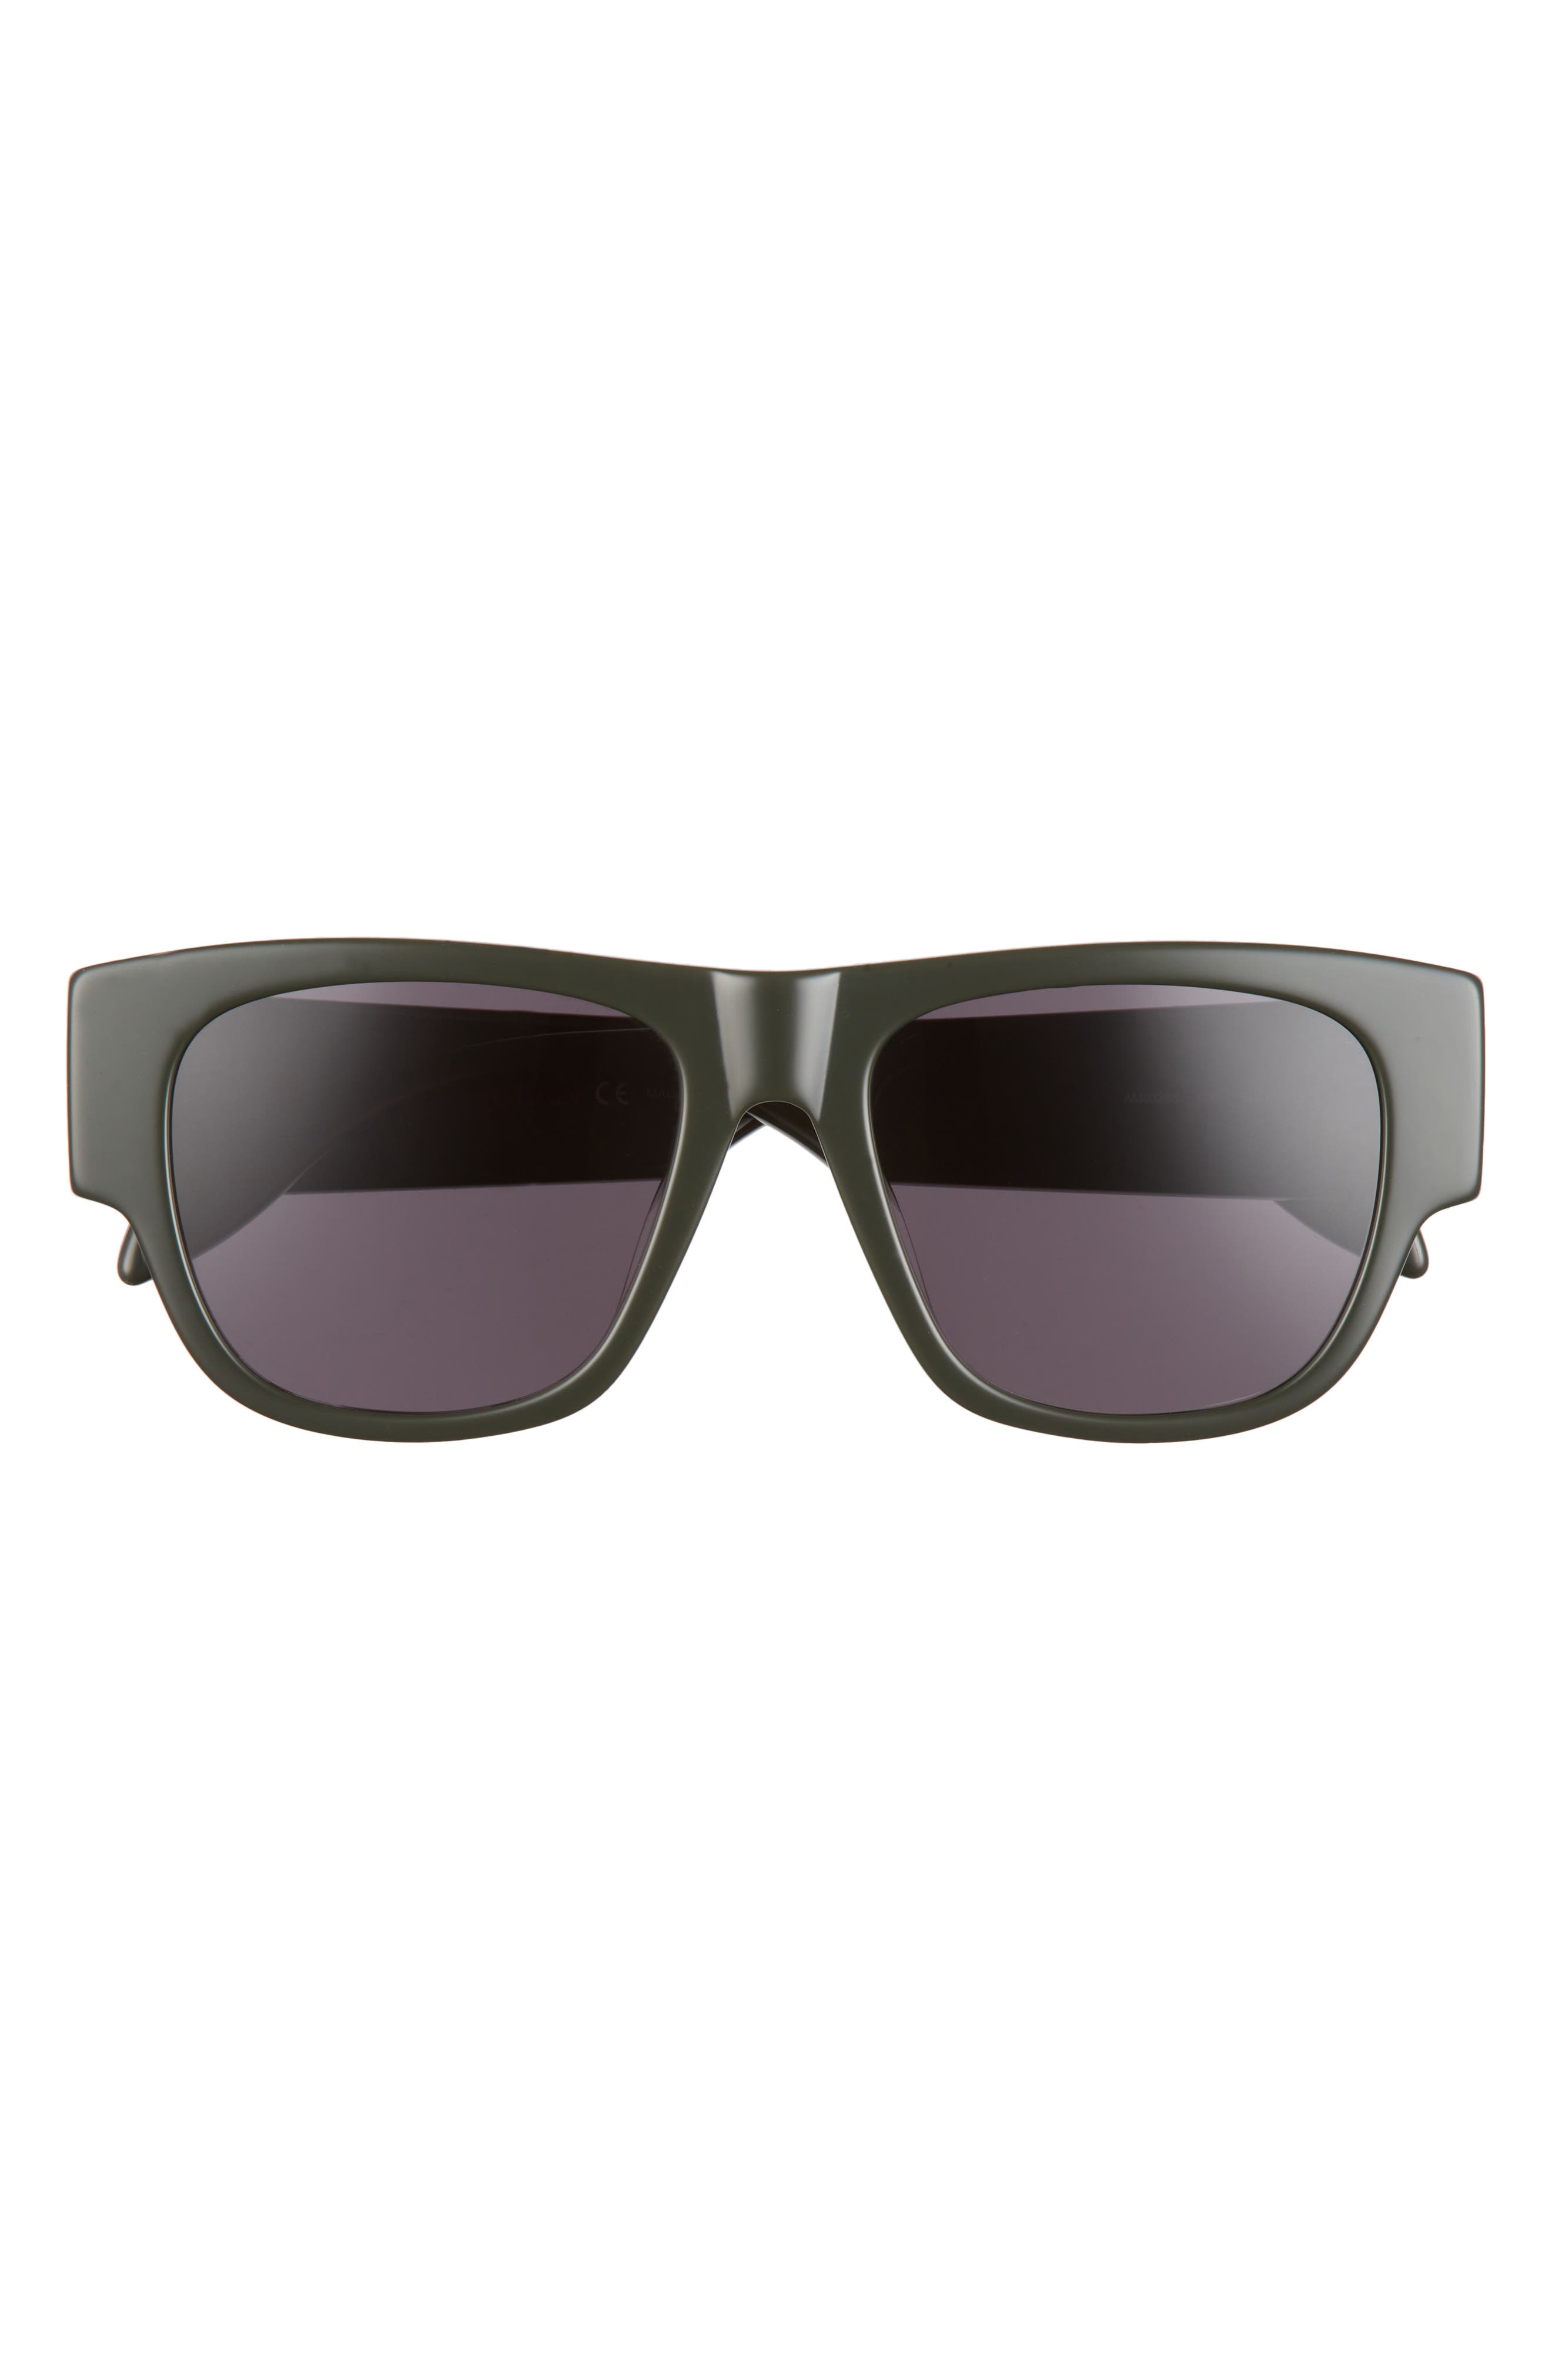 Alexander McQueen 54mm Rectangular Sunglasses in Green at Nordstrom